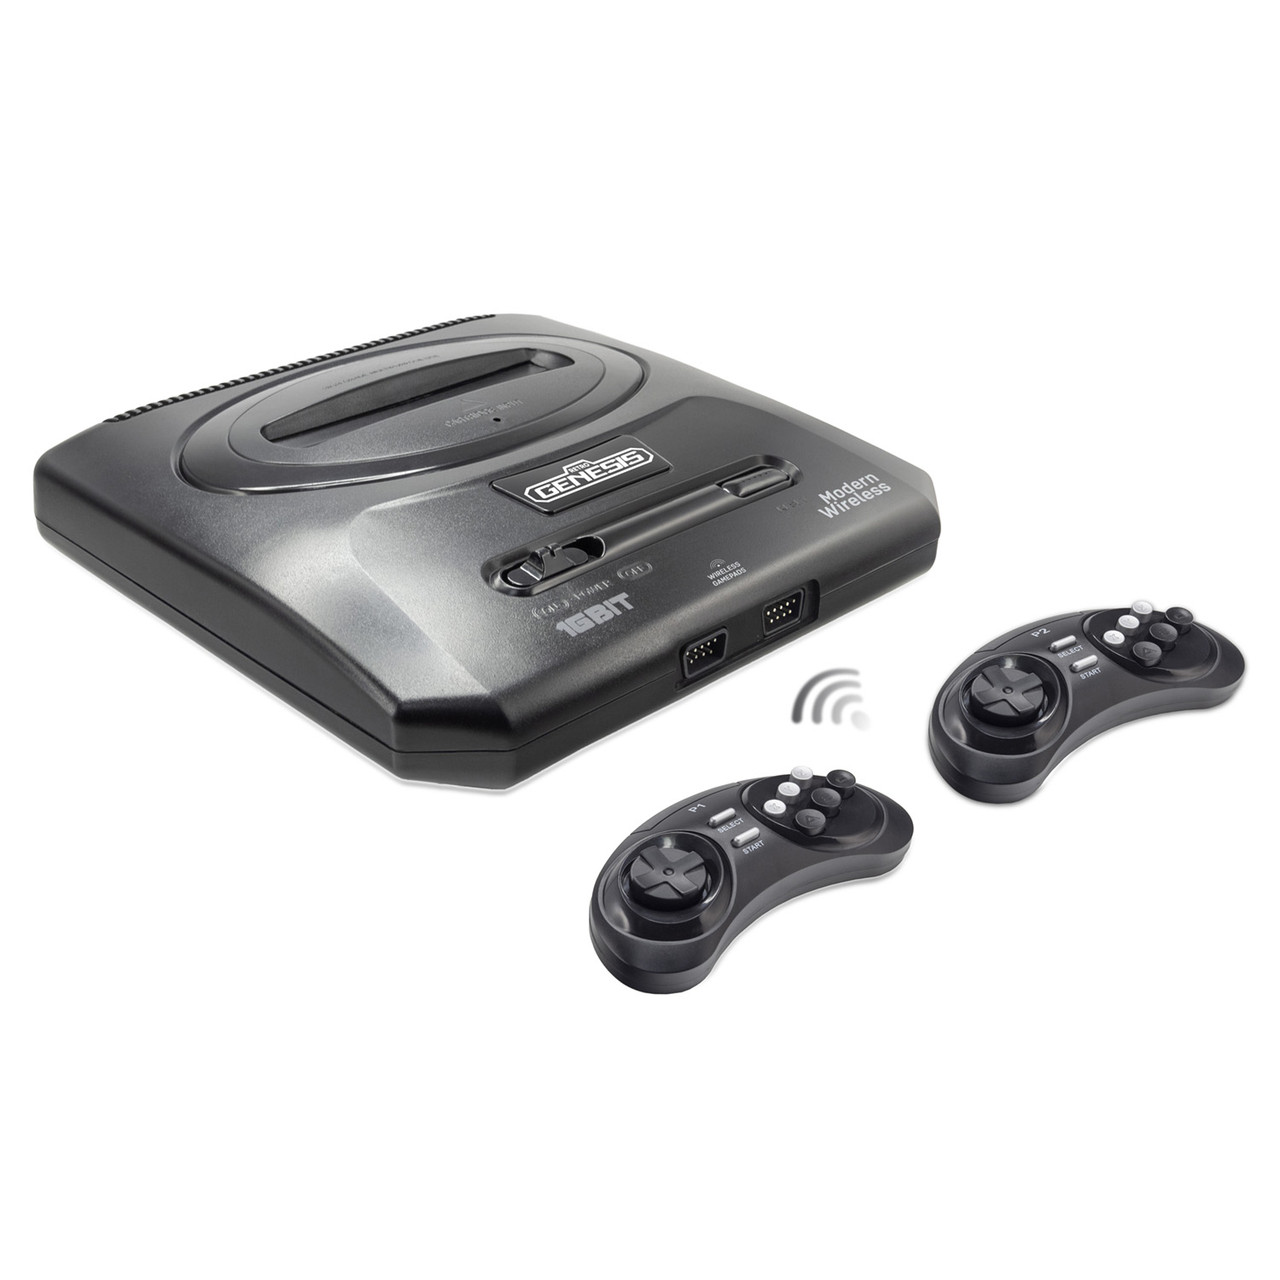 Игровая приставка Retro Genesis Modern Wireless + 170 игр